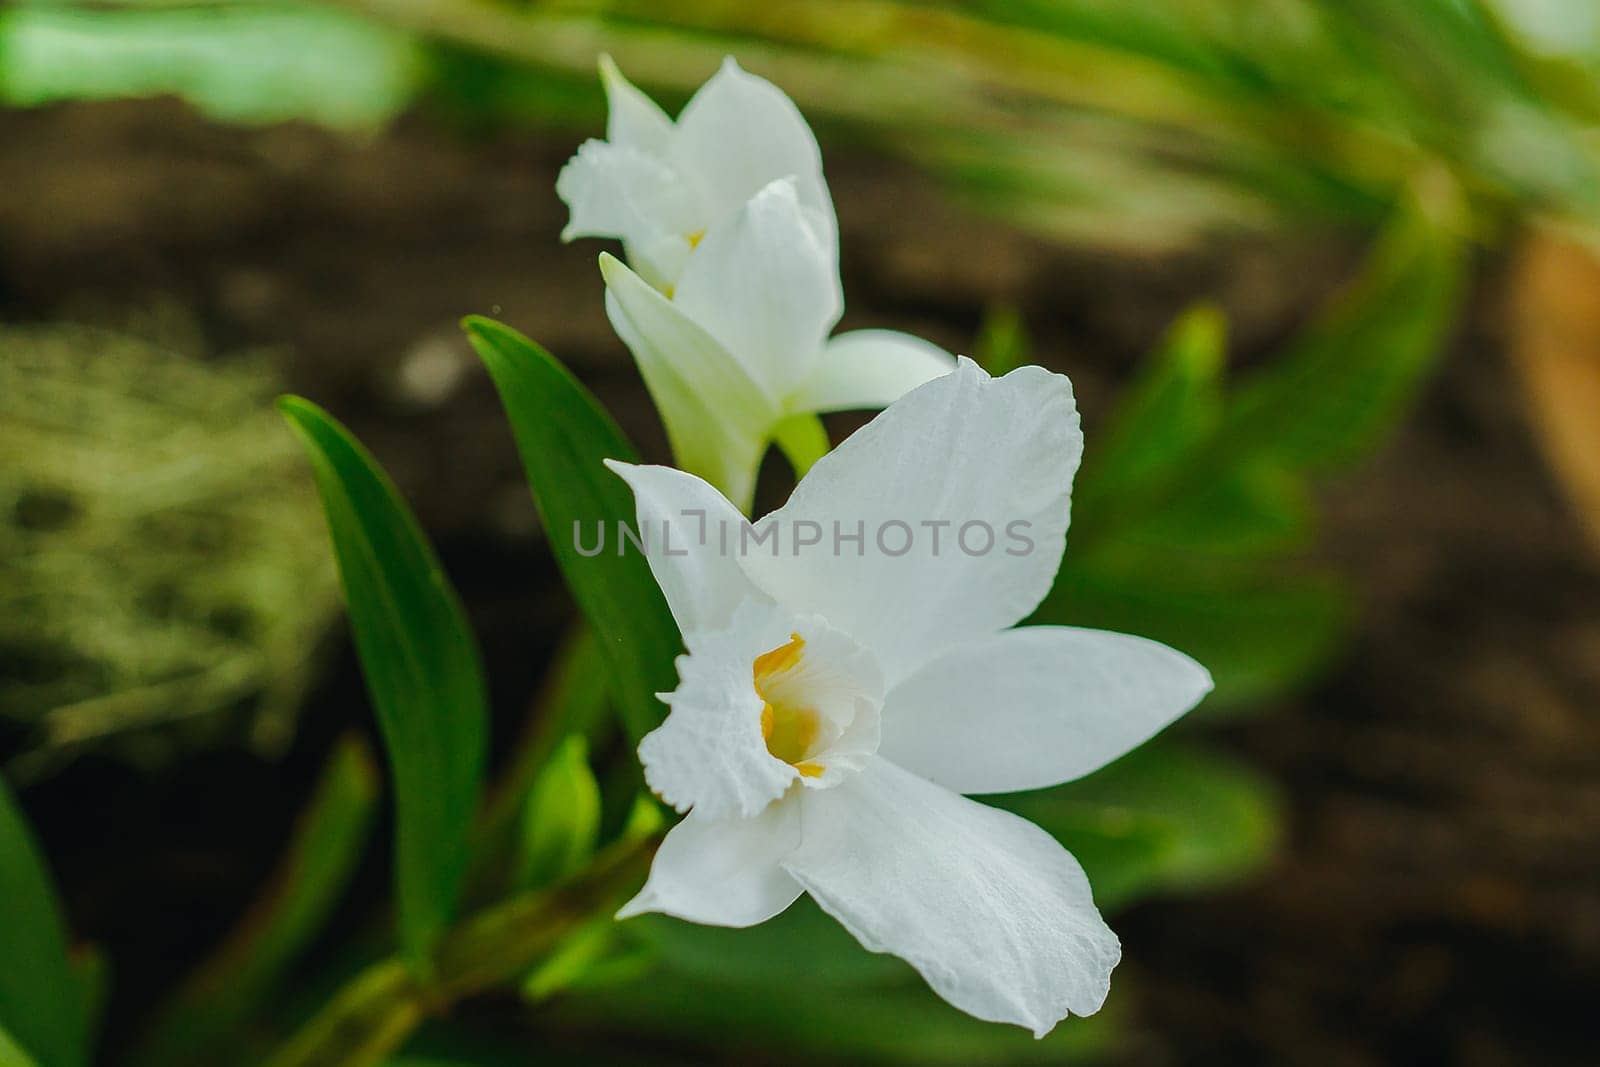 Dendrobium infundibulum fragrant flowers by Puripatt